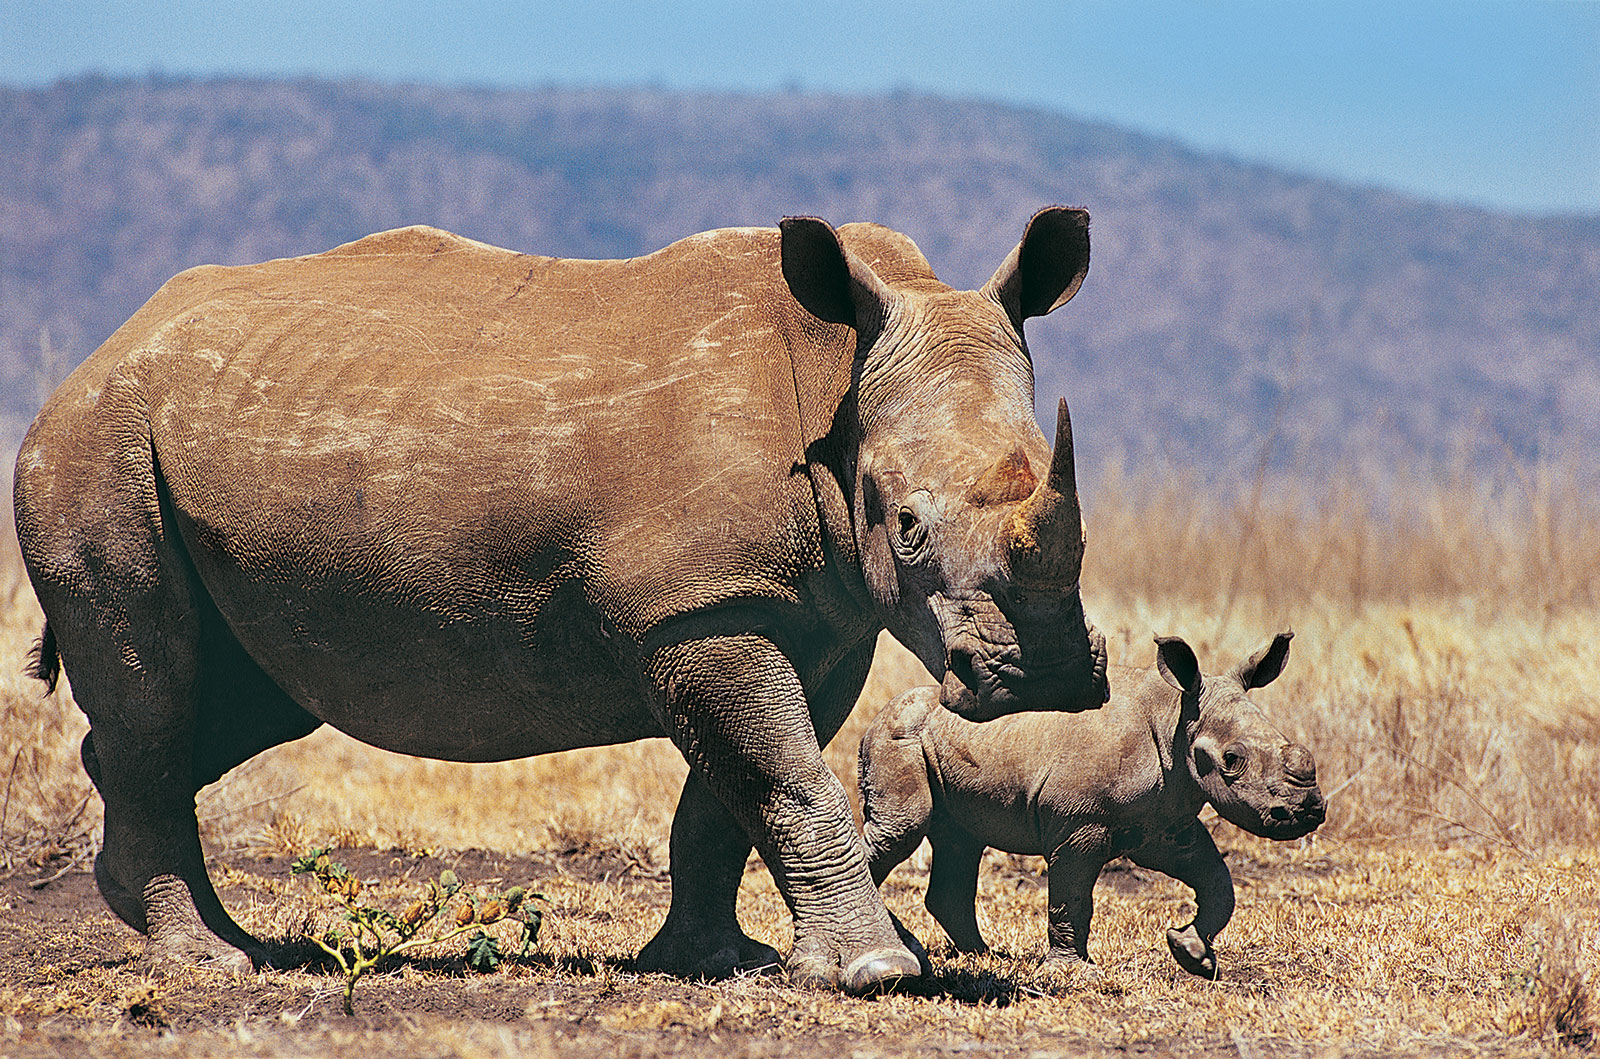 javan rhino International Rhino Foundation